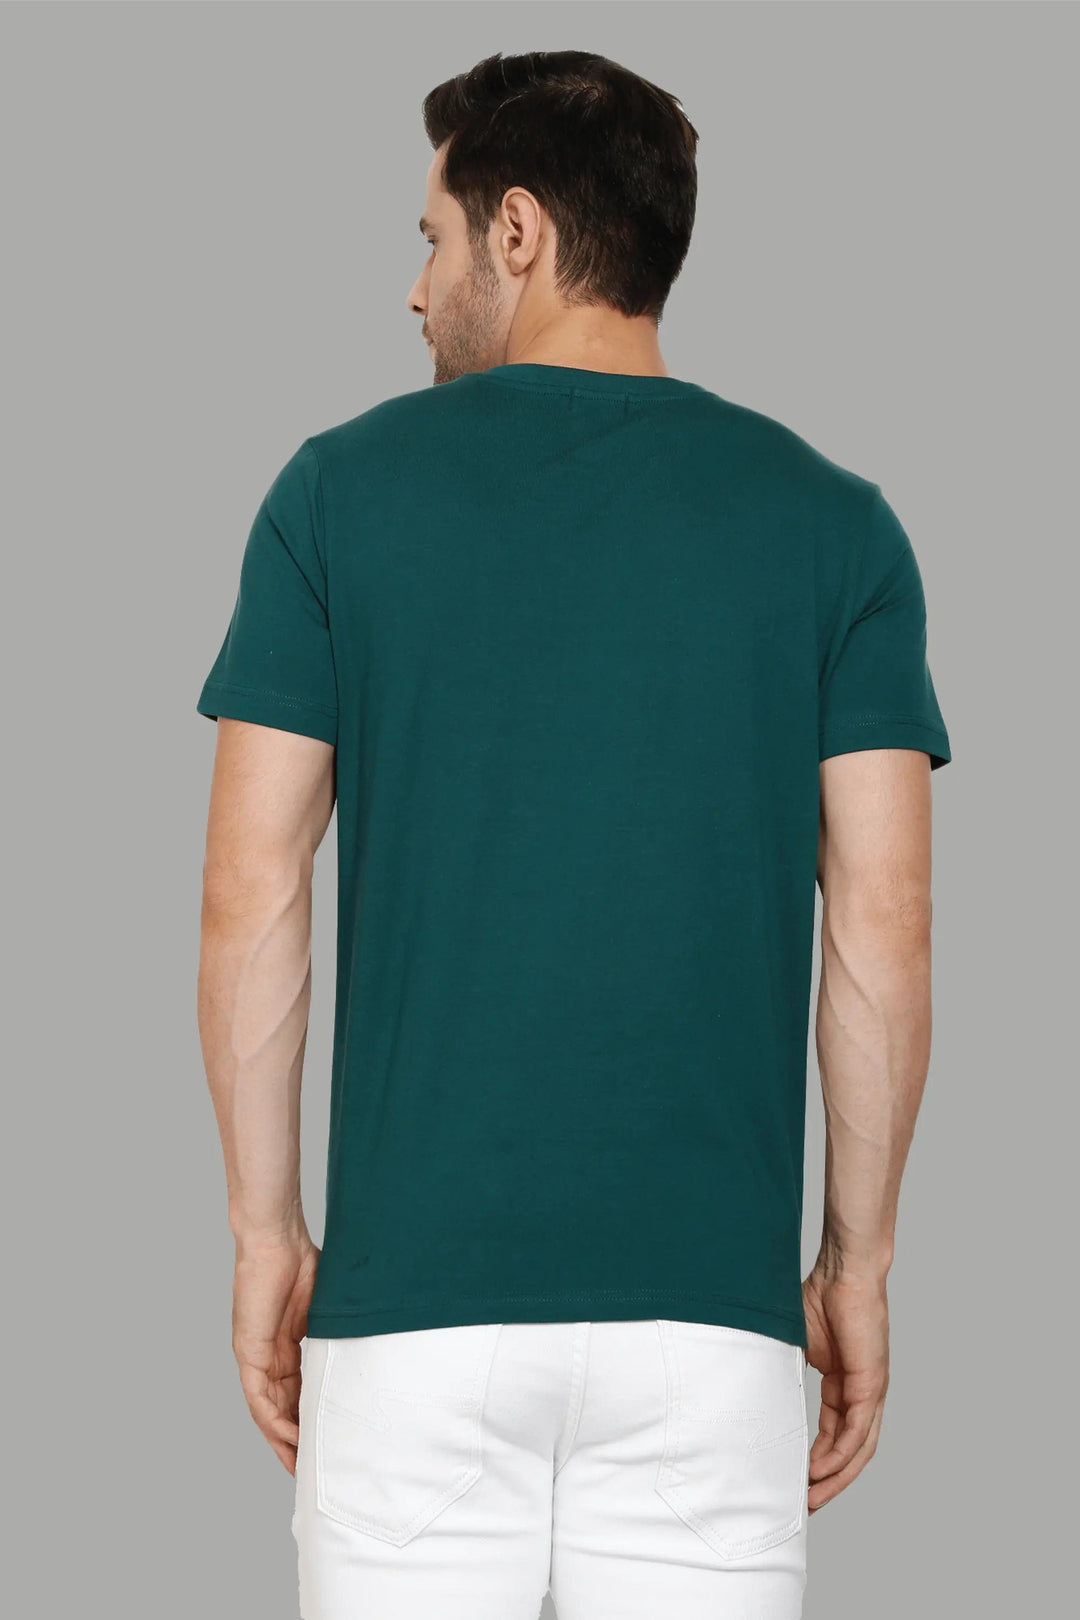 Men's Regular Fit Cotton Printed Round Neck T-Shirt - Peplos Jeans 